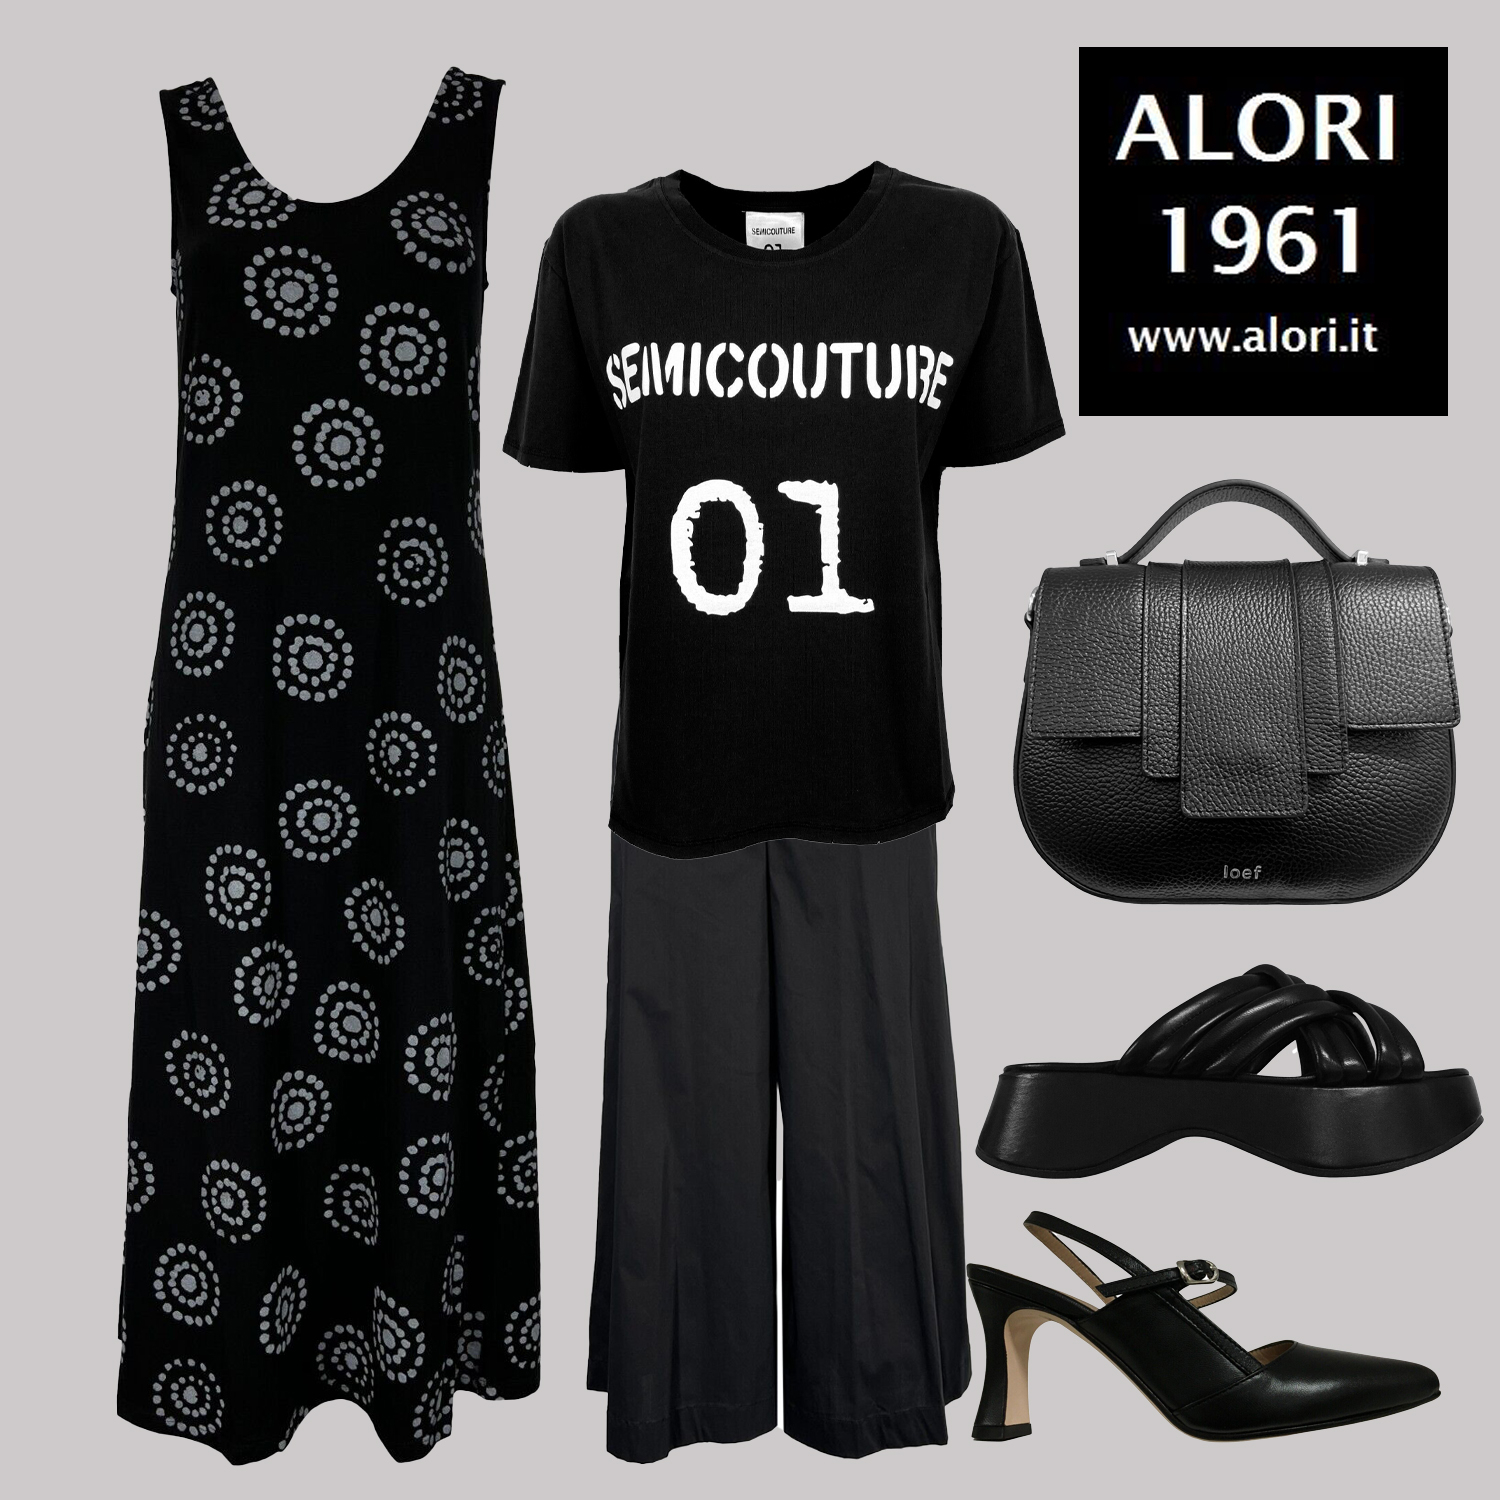 7 Reasons why I love wearing black - ALORI 1961